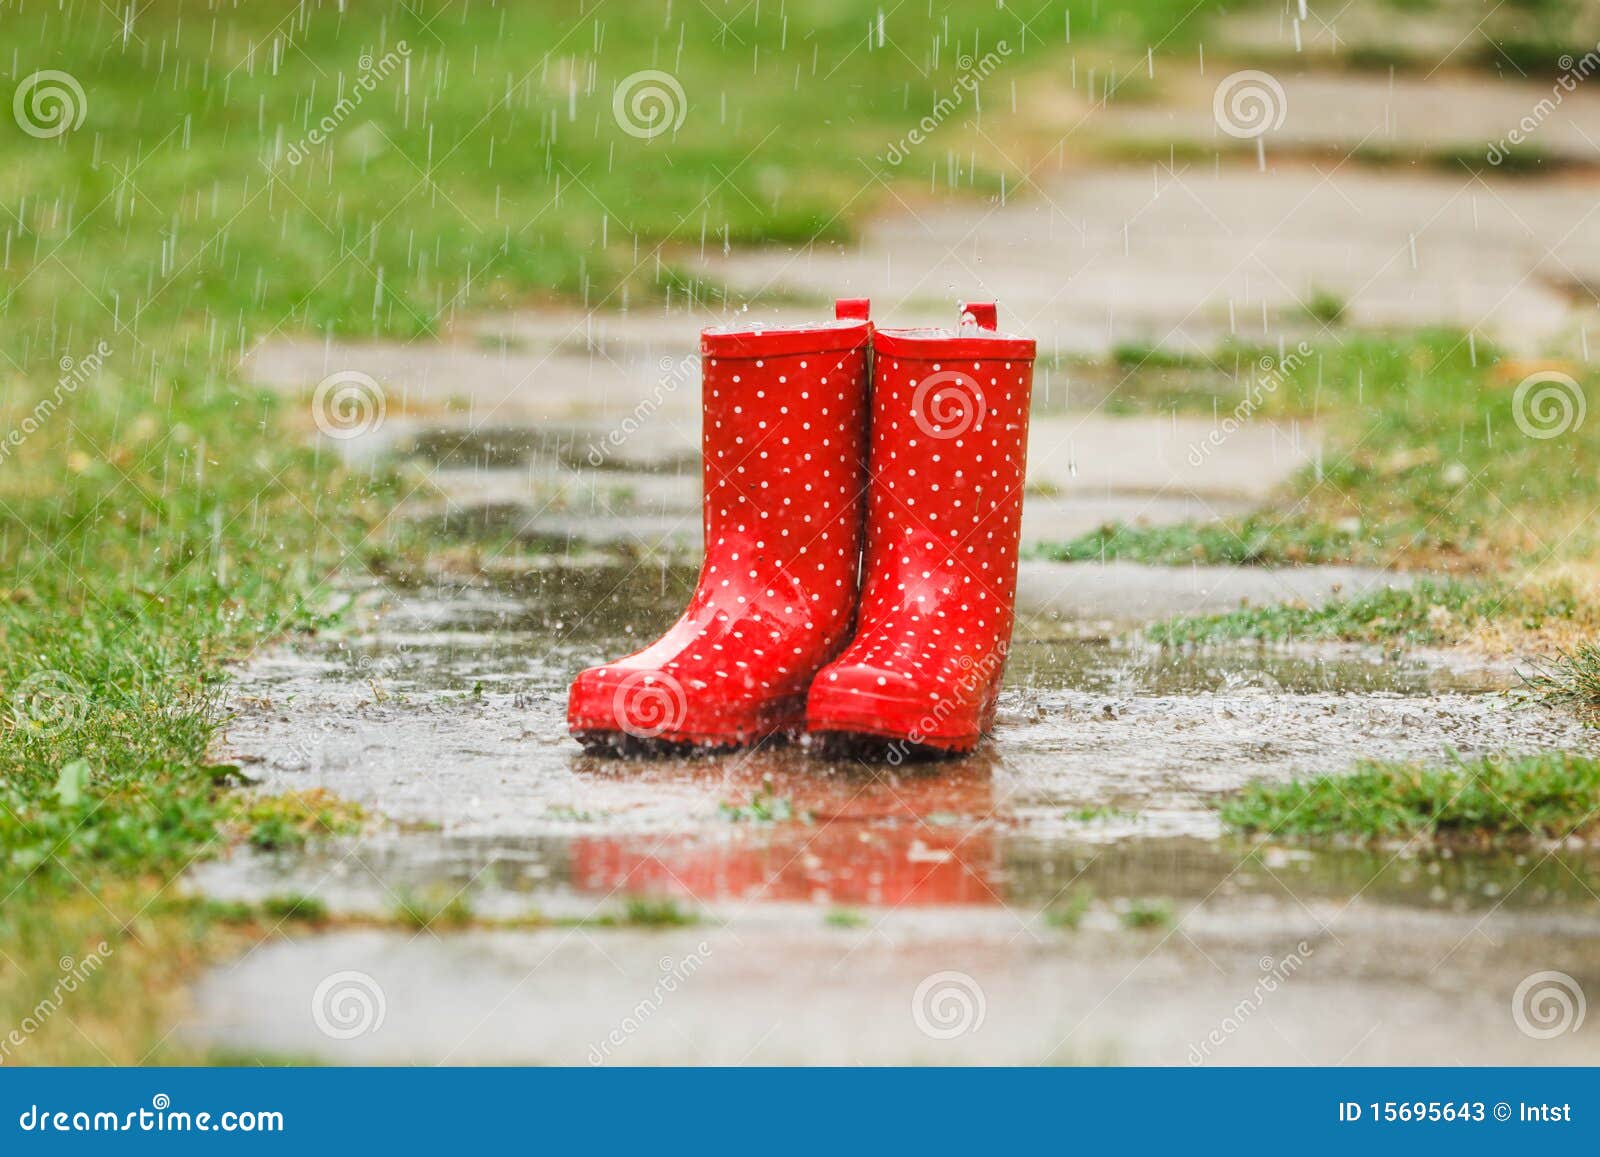 gum boots for rain